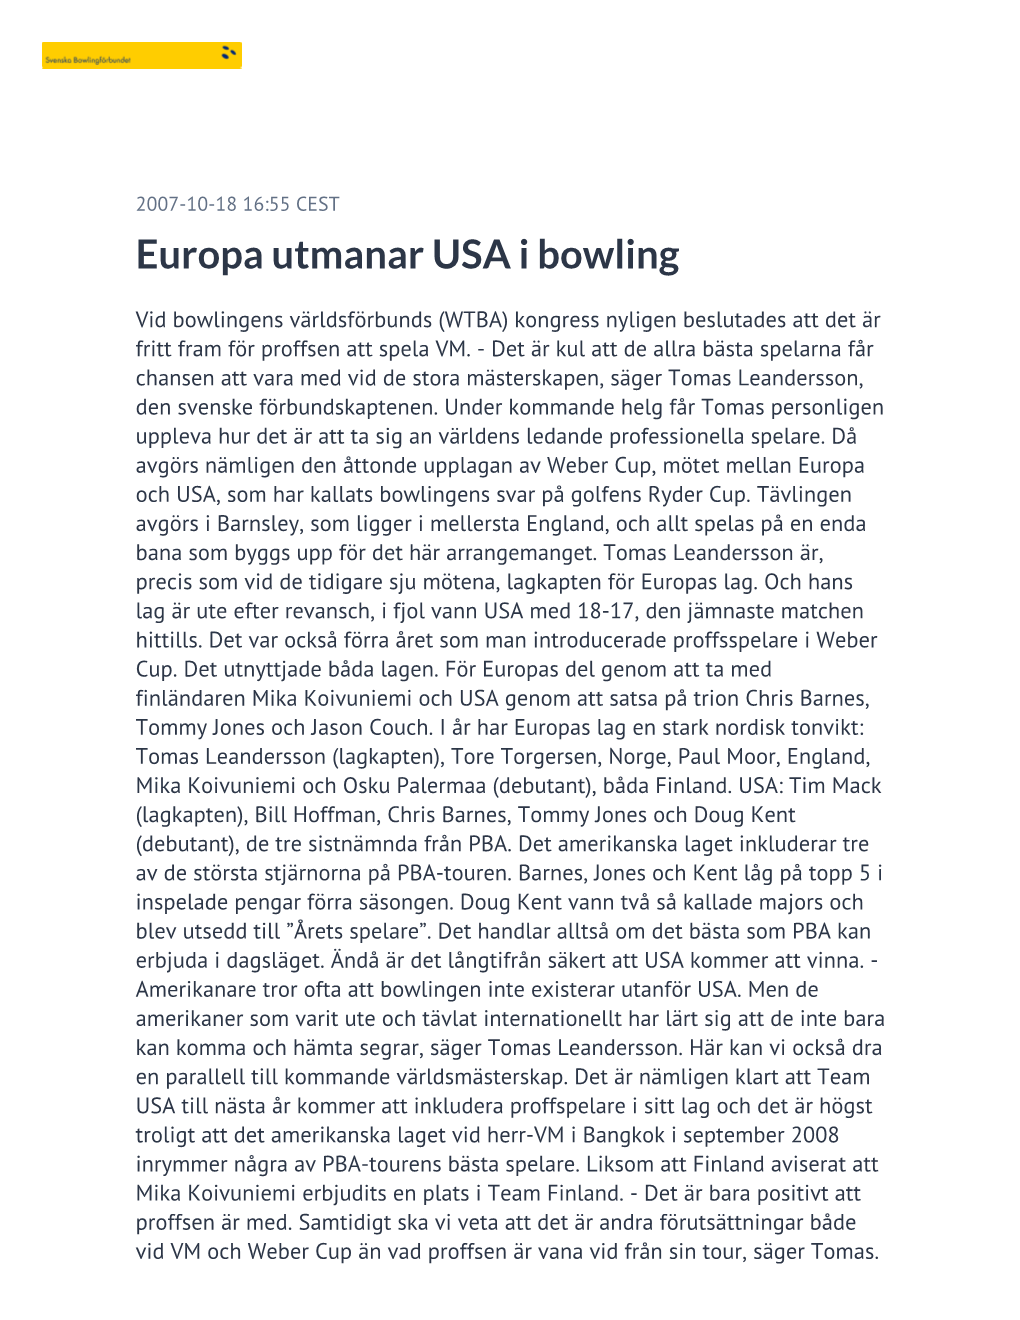 Europa Utmanar USA I Bowling